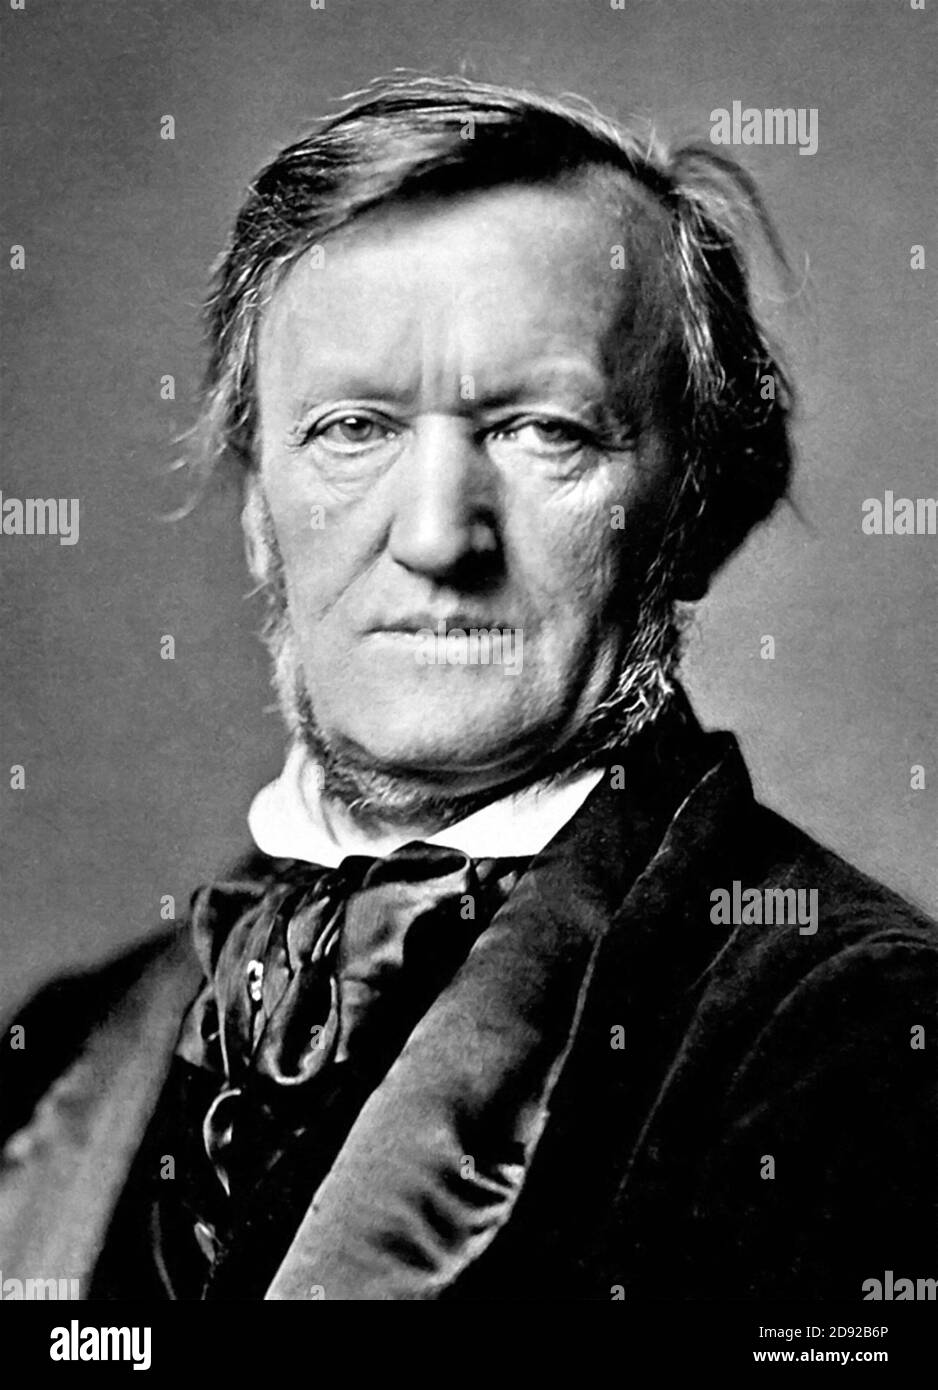 Richard Wagner. Portrait of the German composer, Wilhelm Richard Wagner (1813-1883) by Franz Hanfstaengl, 1871 Stock Photo